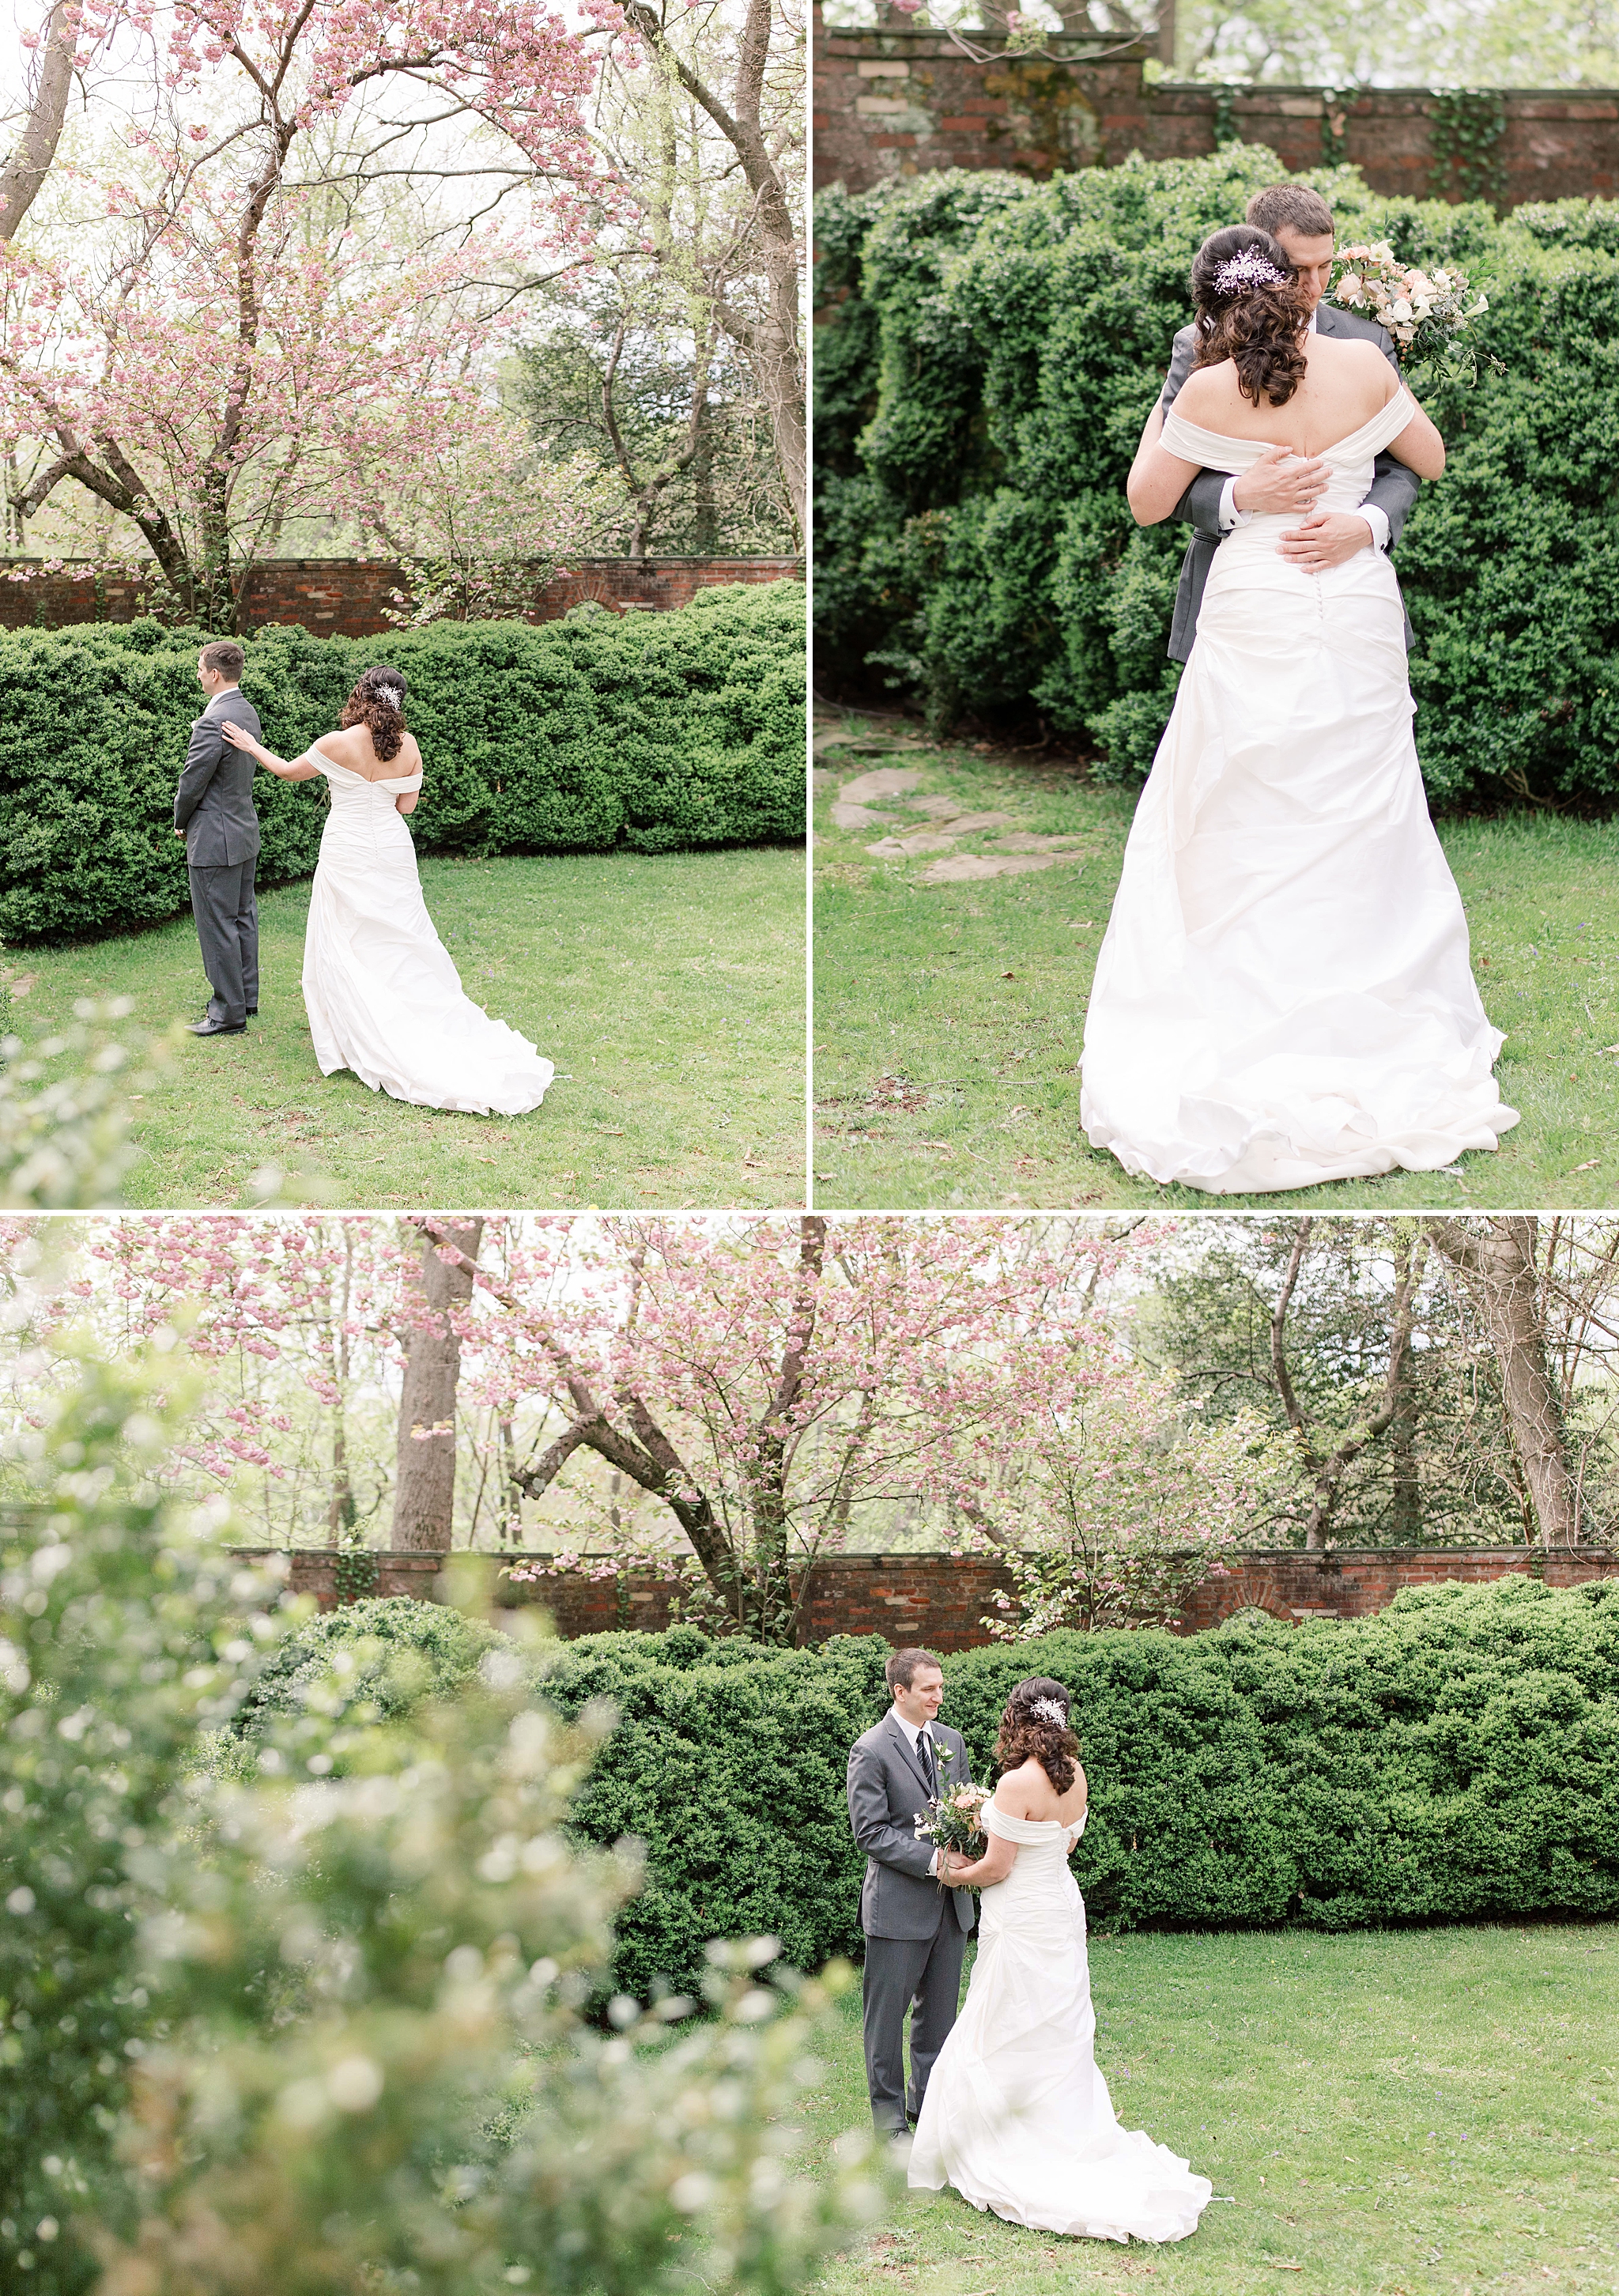 A romantic garden wedding at Hollin Hall in Alexandria, VA.